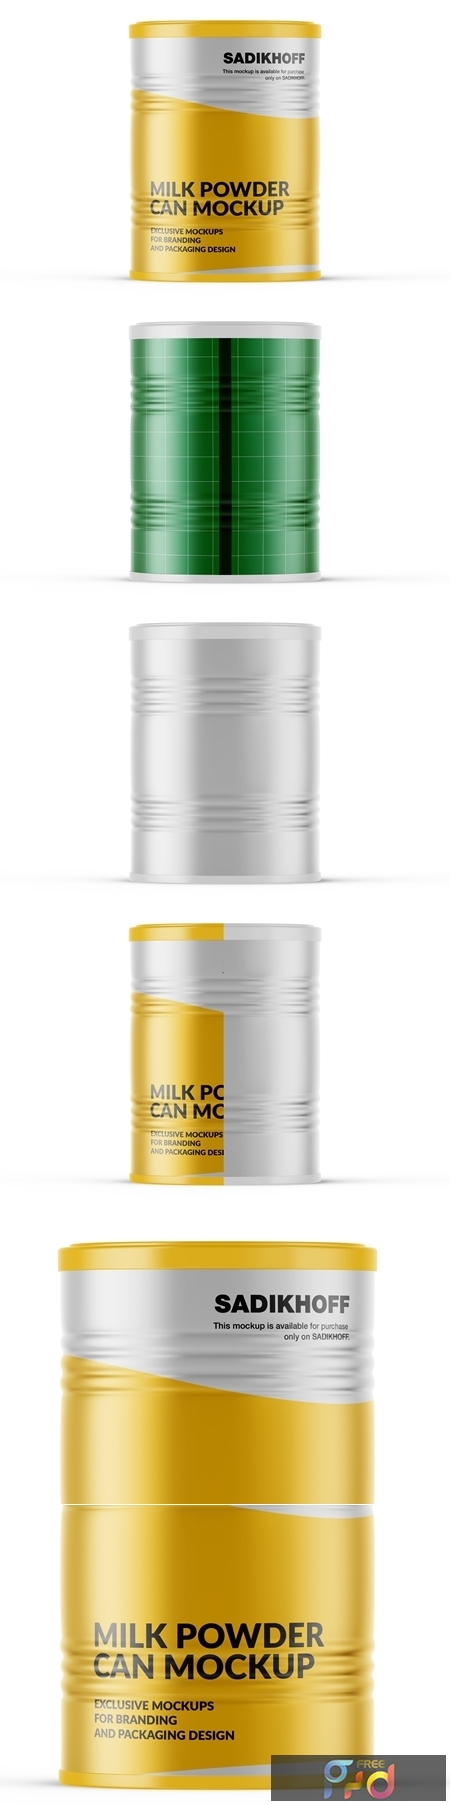 Download Free Milk Powder Can Mockup 4075943 Freepsdvn PSD Mockups.